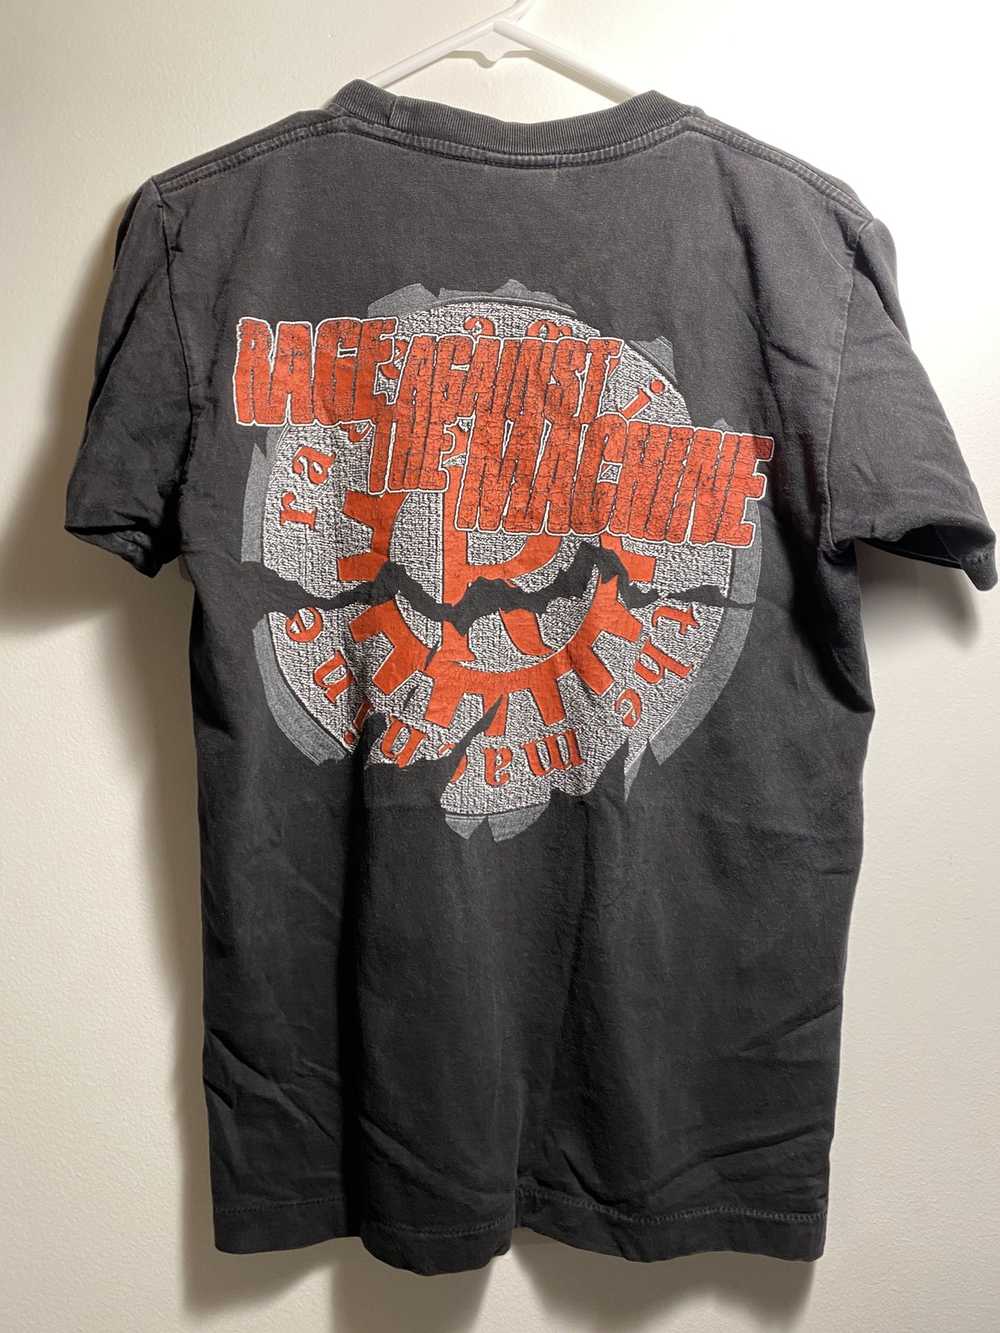 Vintage Vintage Rage Against the Machine T-Shirt - image 2